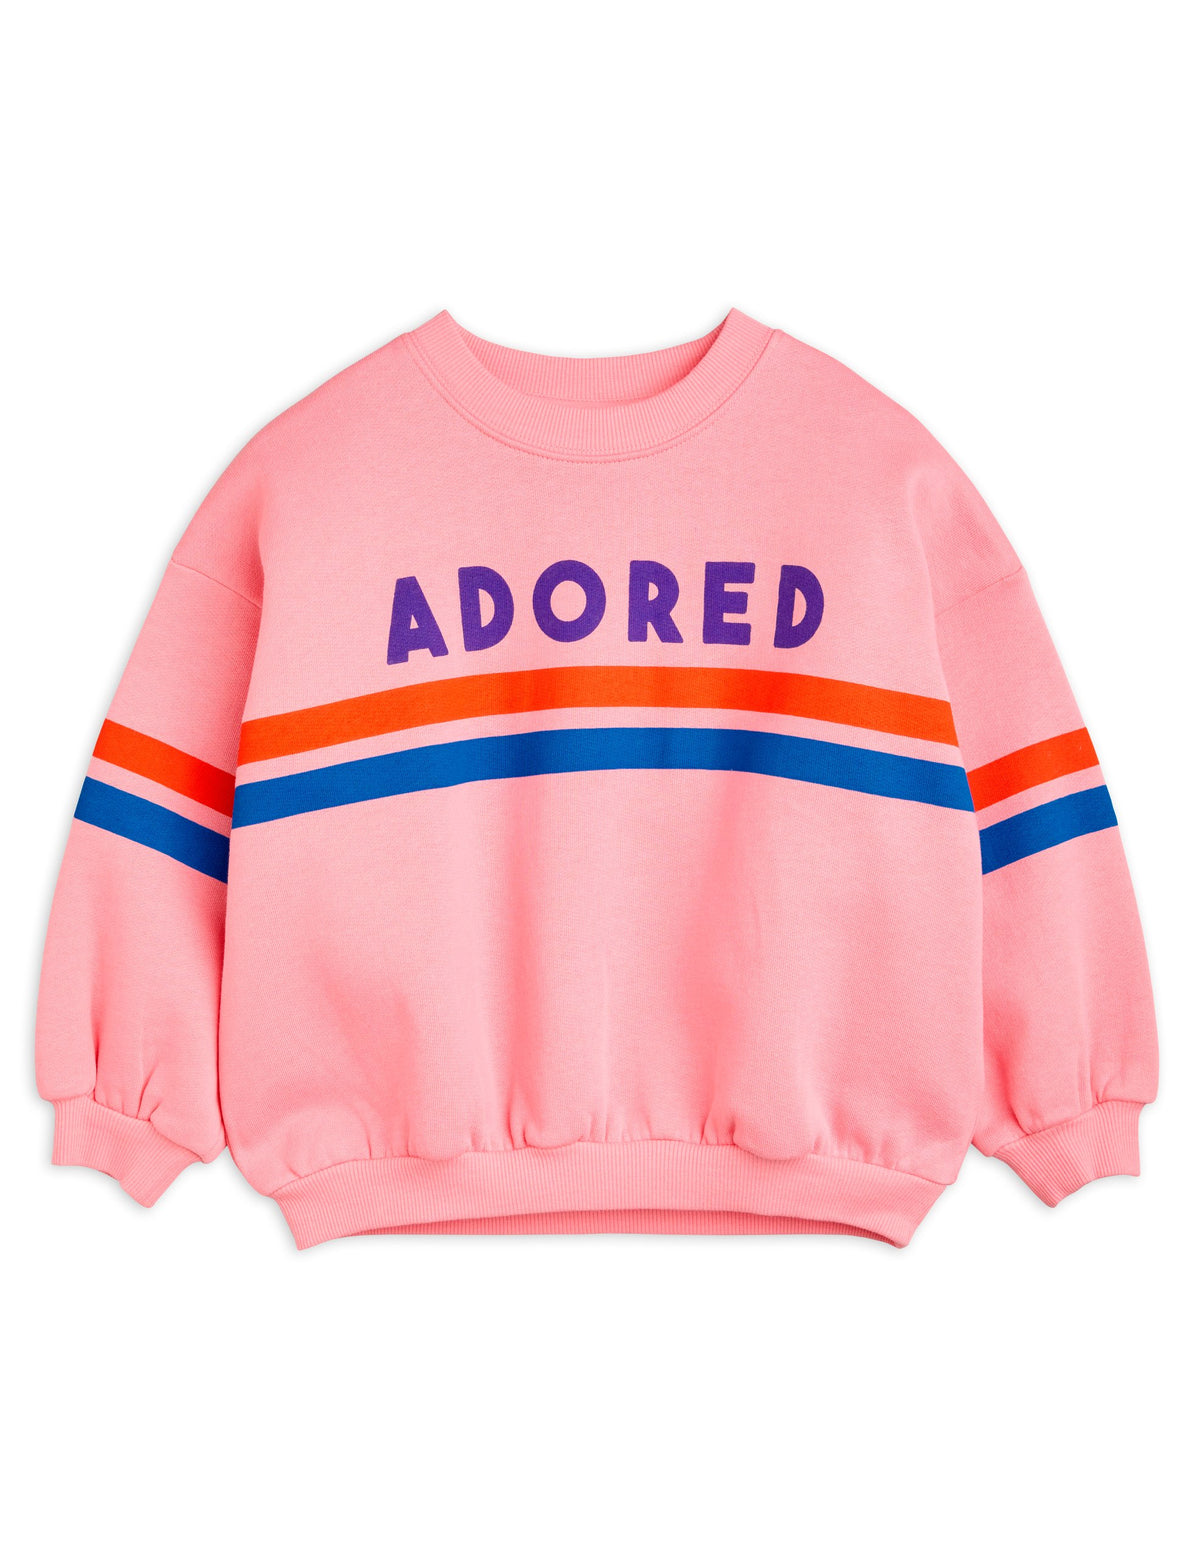 Adored sp sweatshirt, Mini Rodini